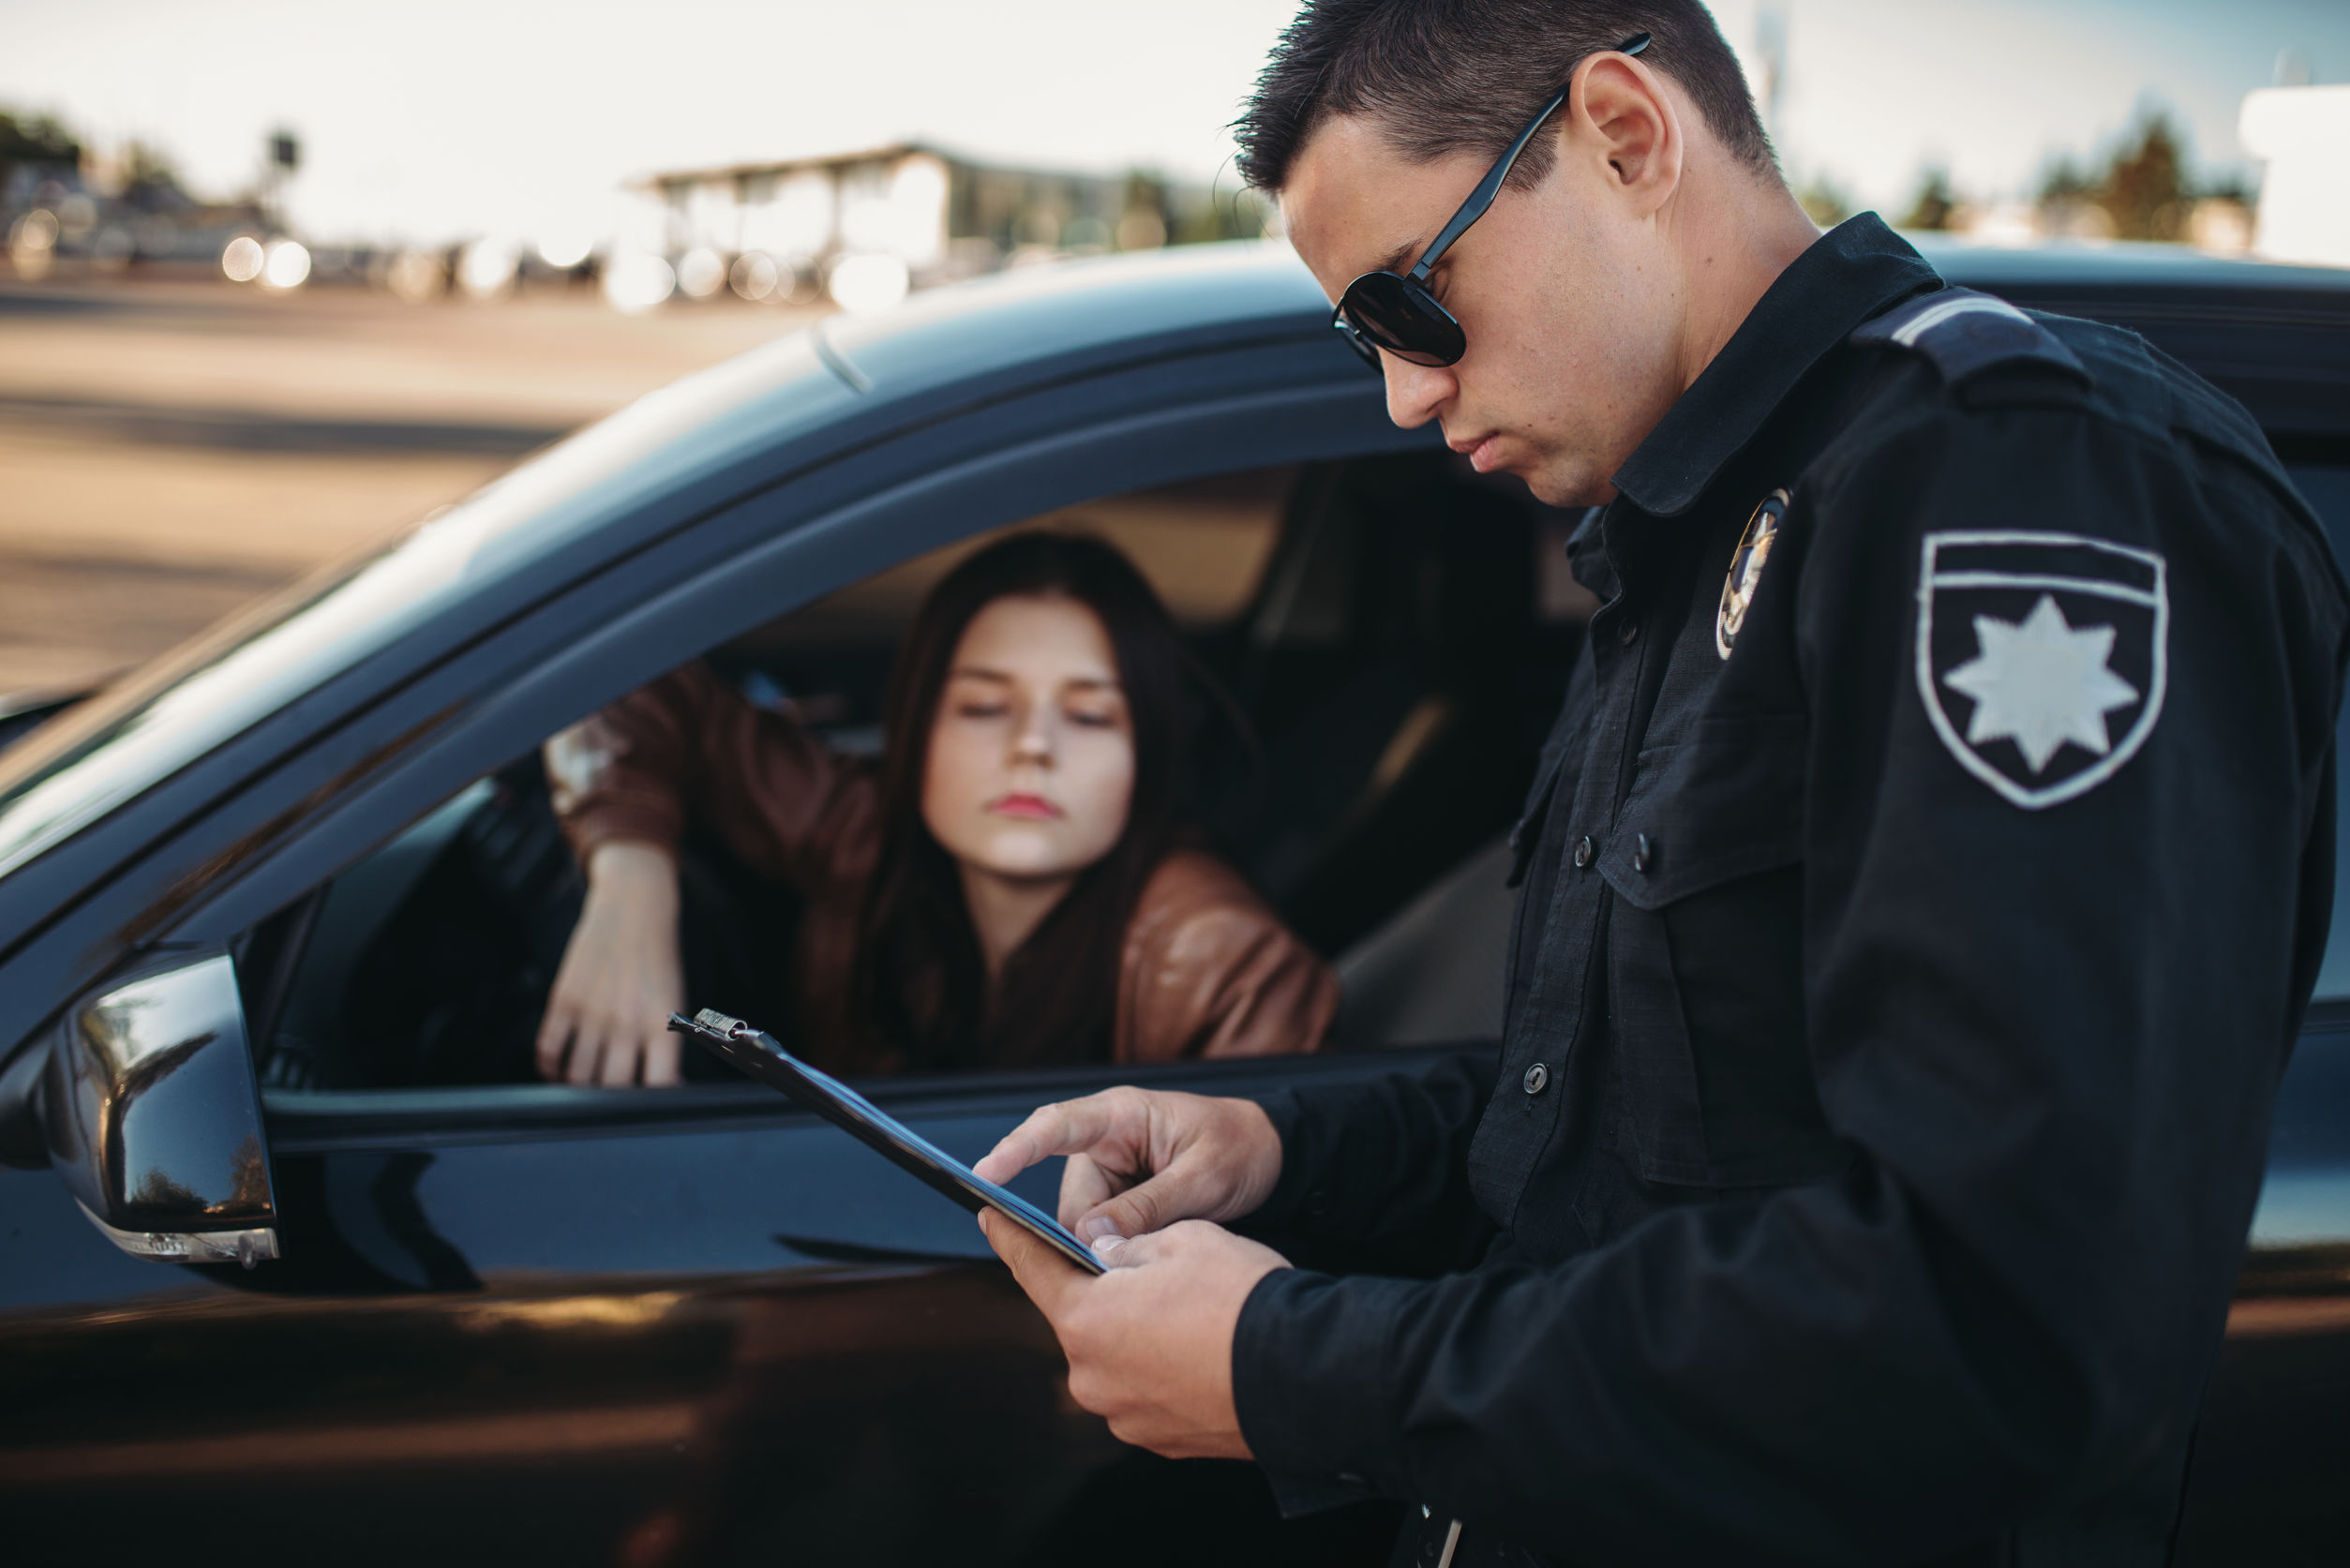 Criminal Speeding in Arizona - Lerner & Rowe Law Group